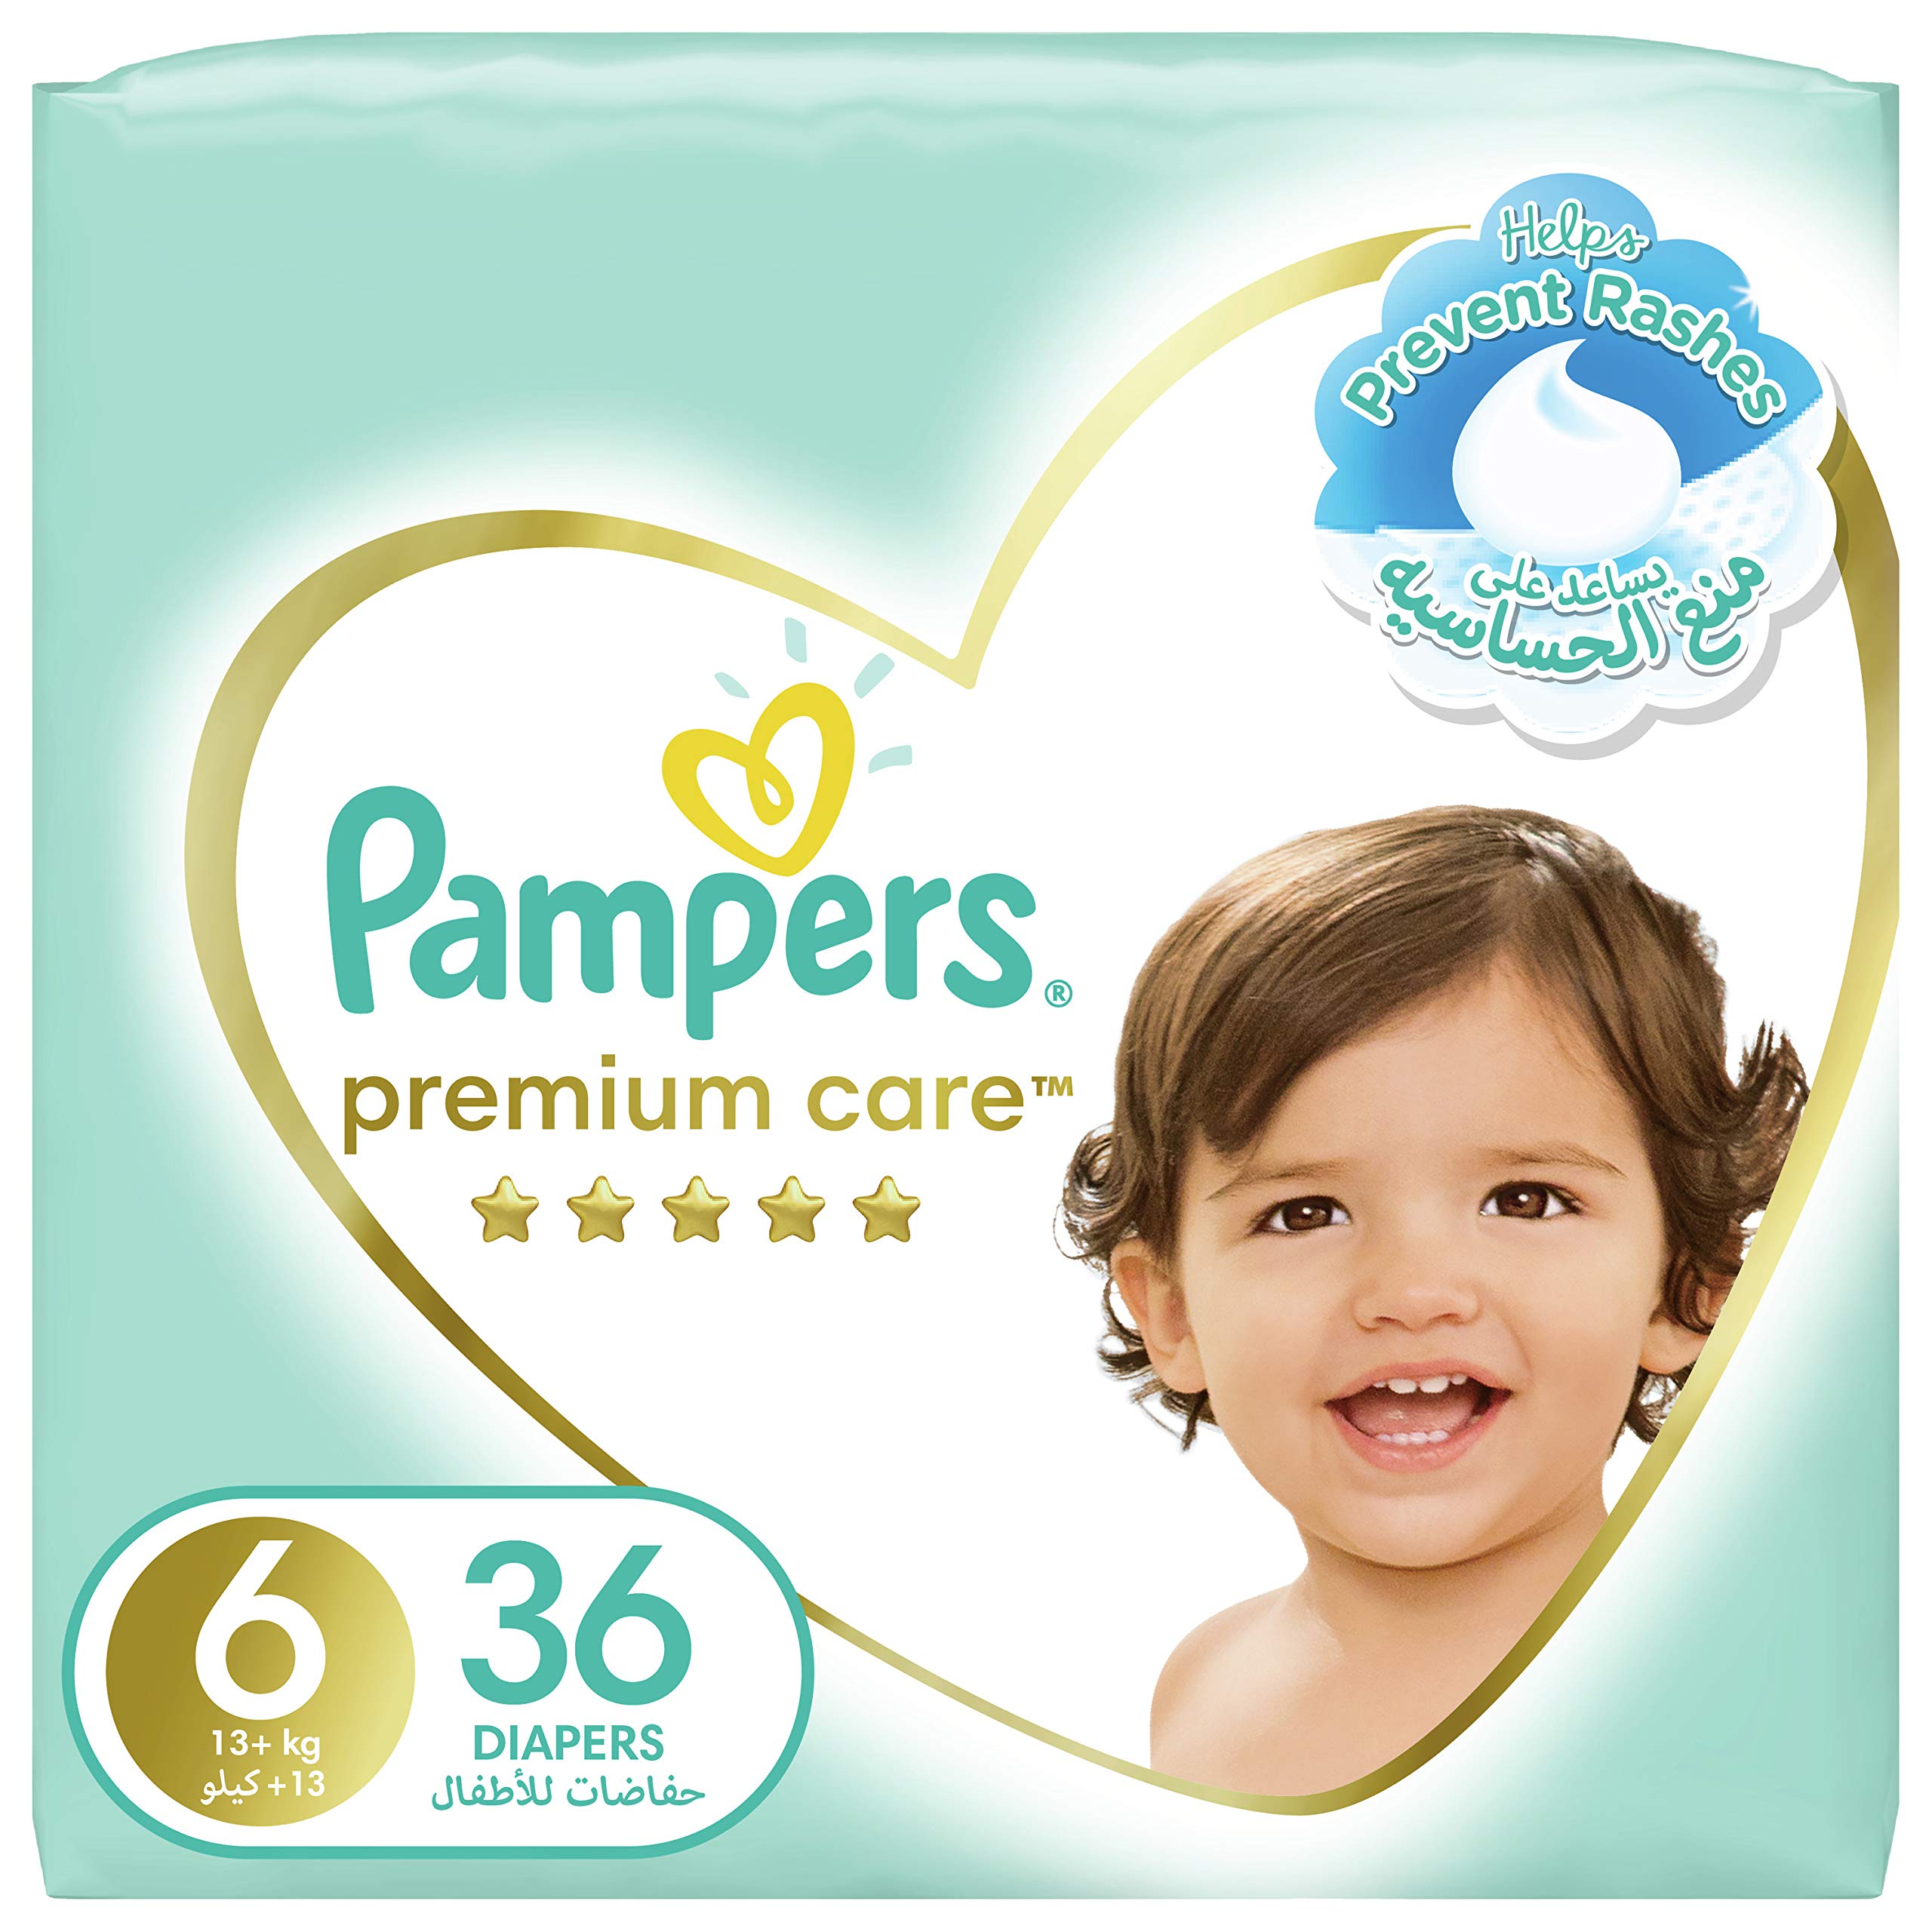 Pampers Premium Care Diapers Size 6, 13+kg The Softest Diaper 36pcs بامبرز عناية مميّزة ، مقاس 6، كبير جداً ، 13+ كغ، العبوة الضخمة، 36 حفاض